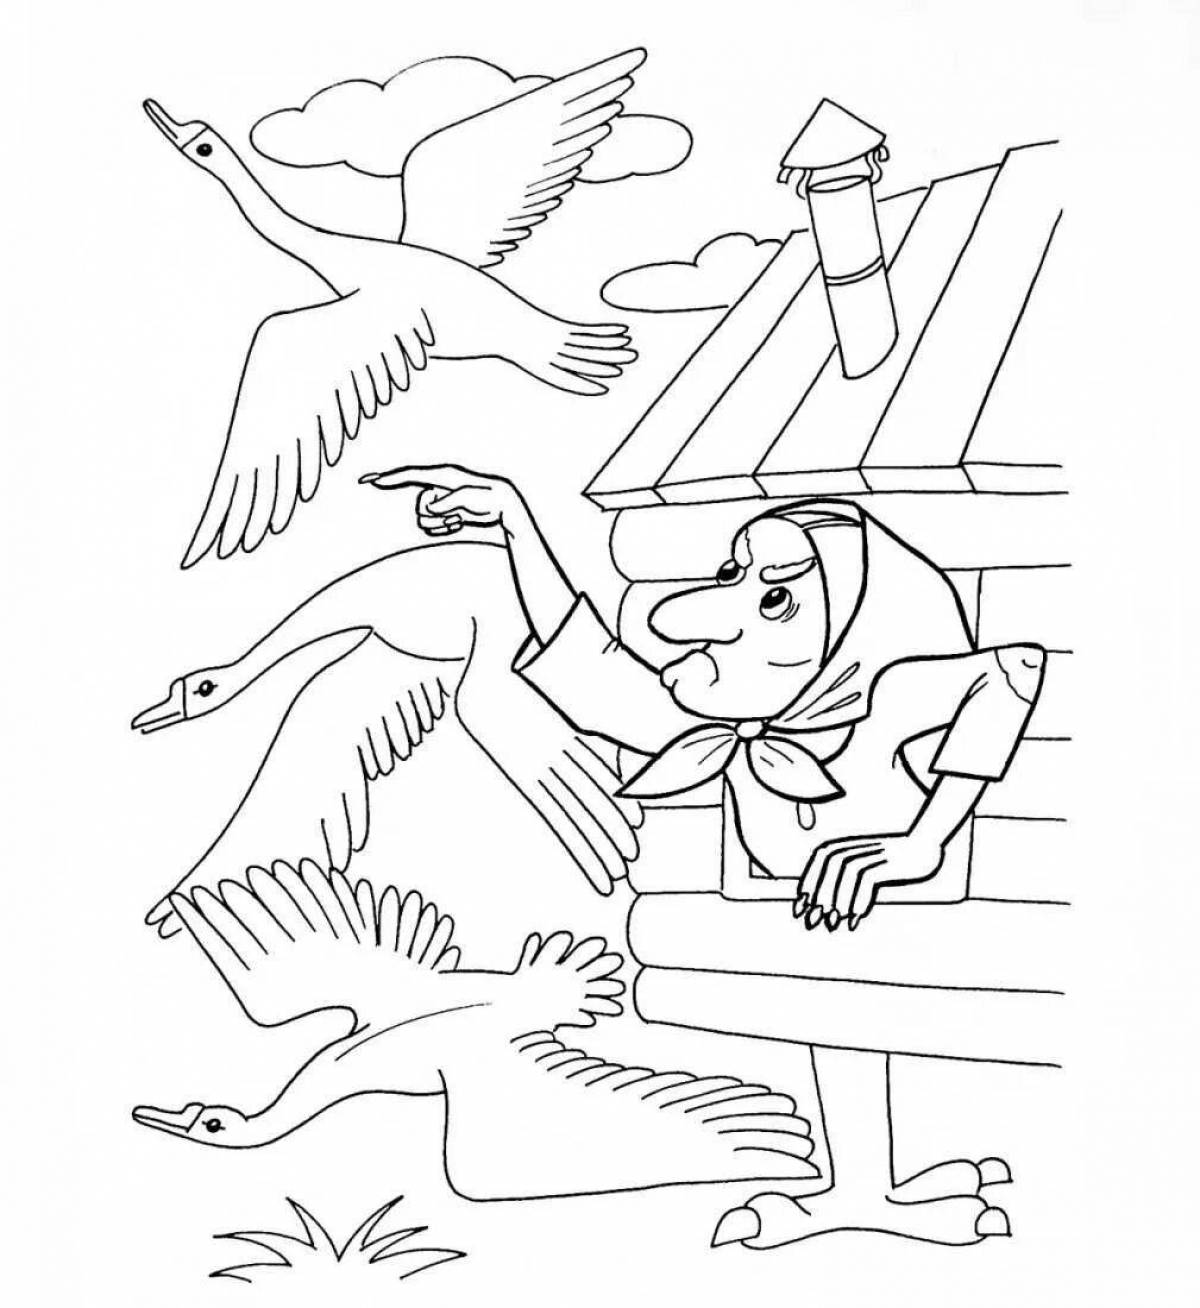 Fun geese-swan coloring for pre-k